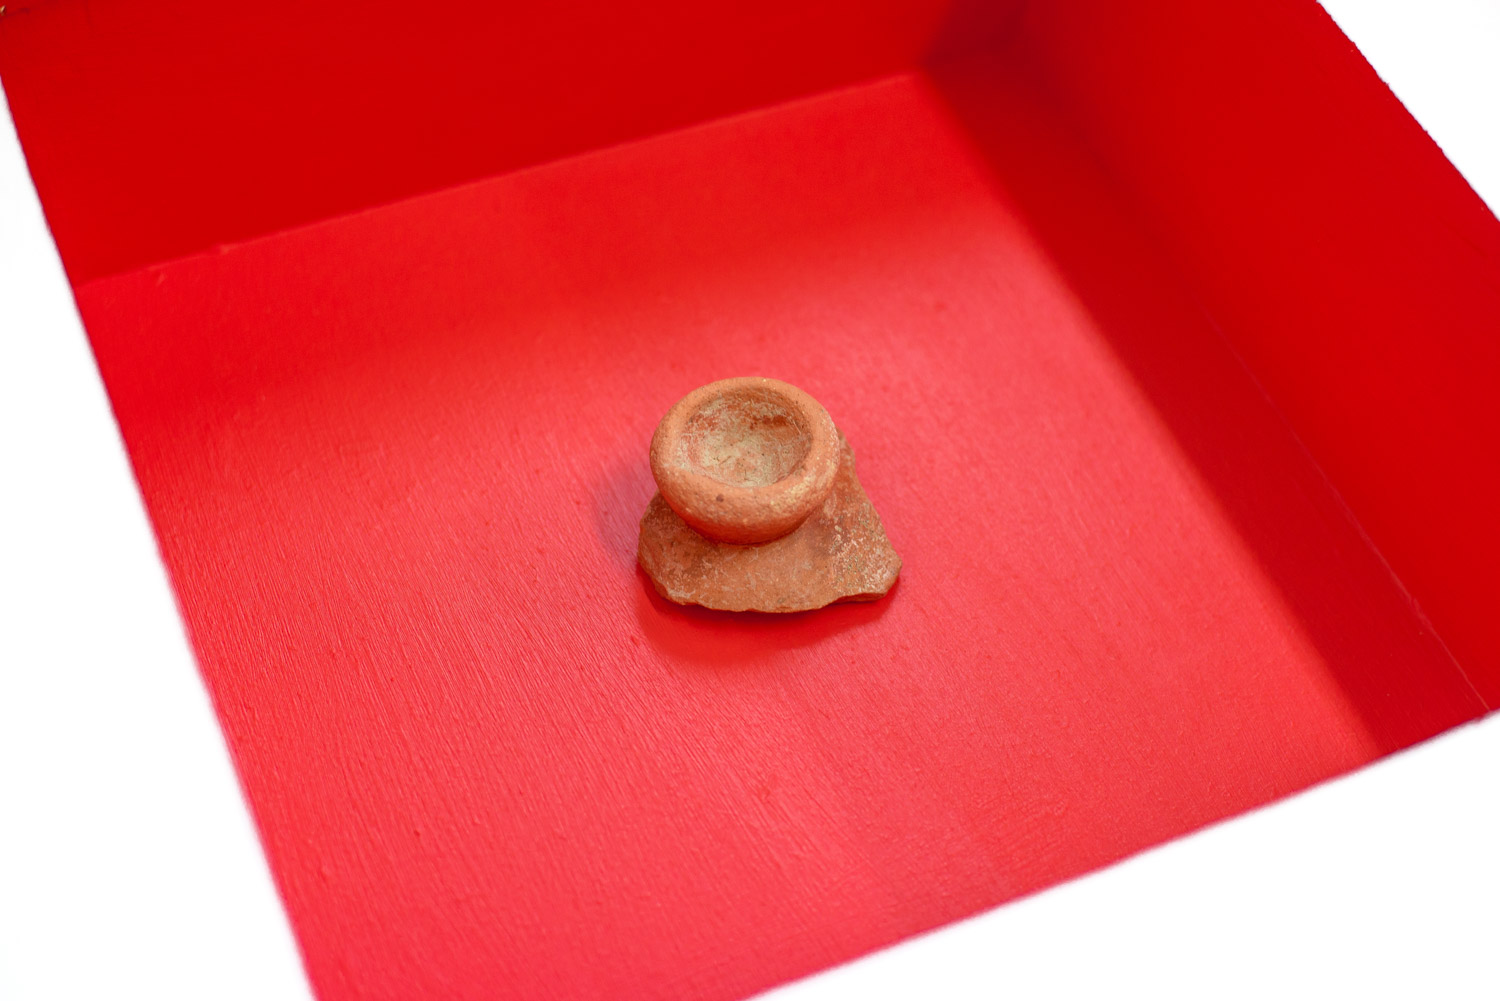 ceramic piece in a red box musuem